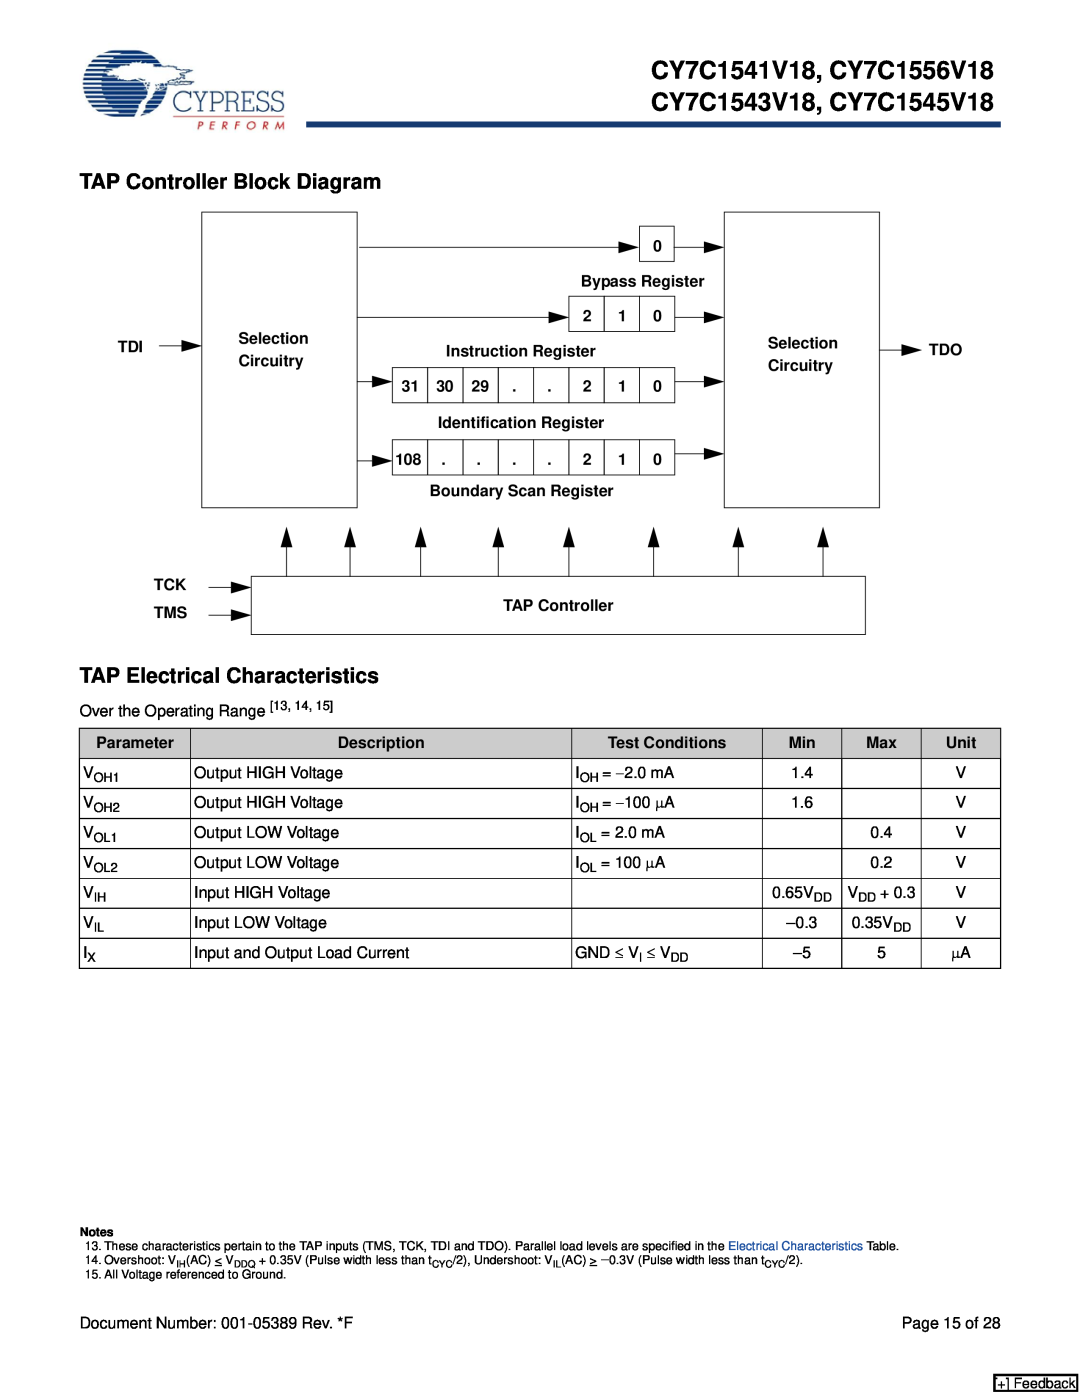 Cypress CY7C1541V18, CY7C1543V18, CY7C1545V18, CY7C1556V18 manual TAP Controller Block Diagram, TAP Electrical Characteristics 